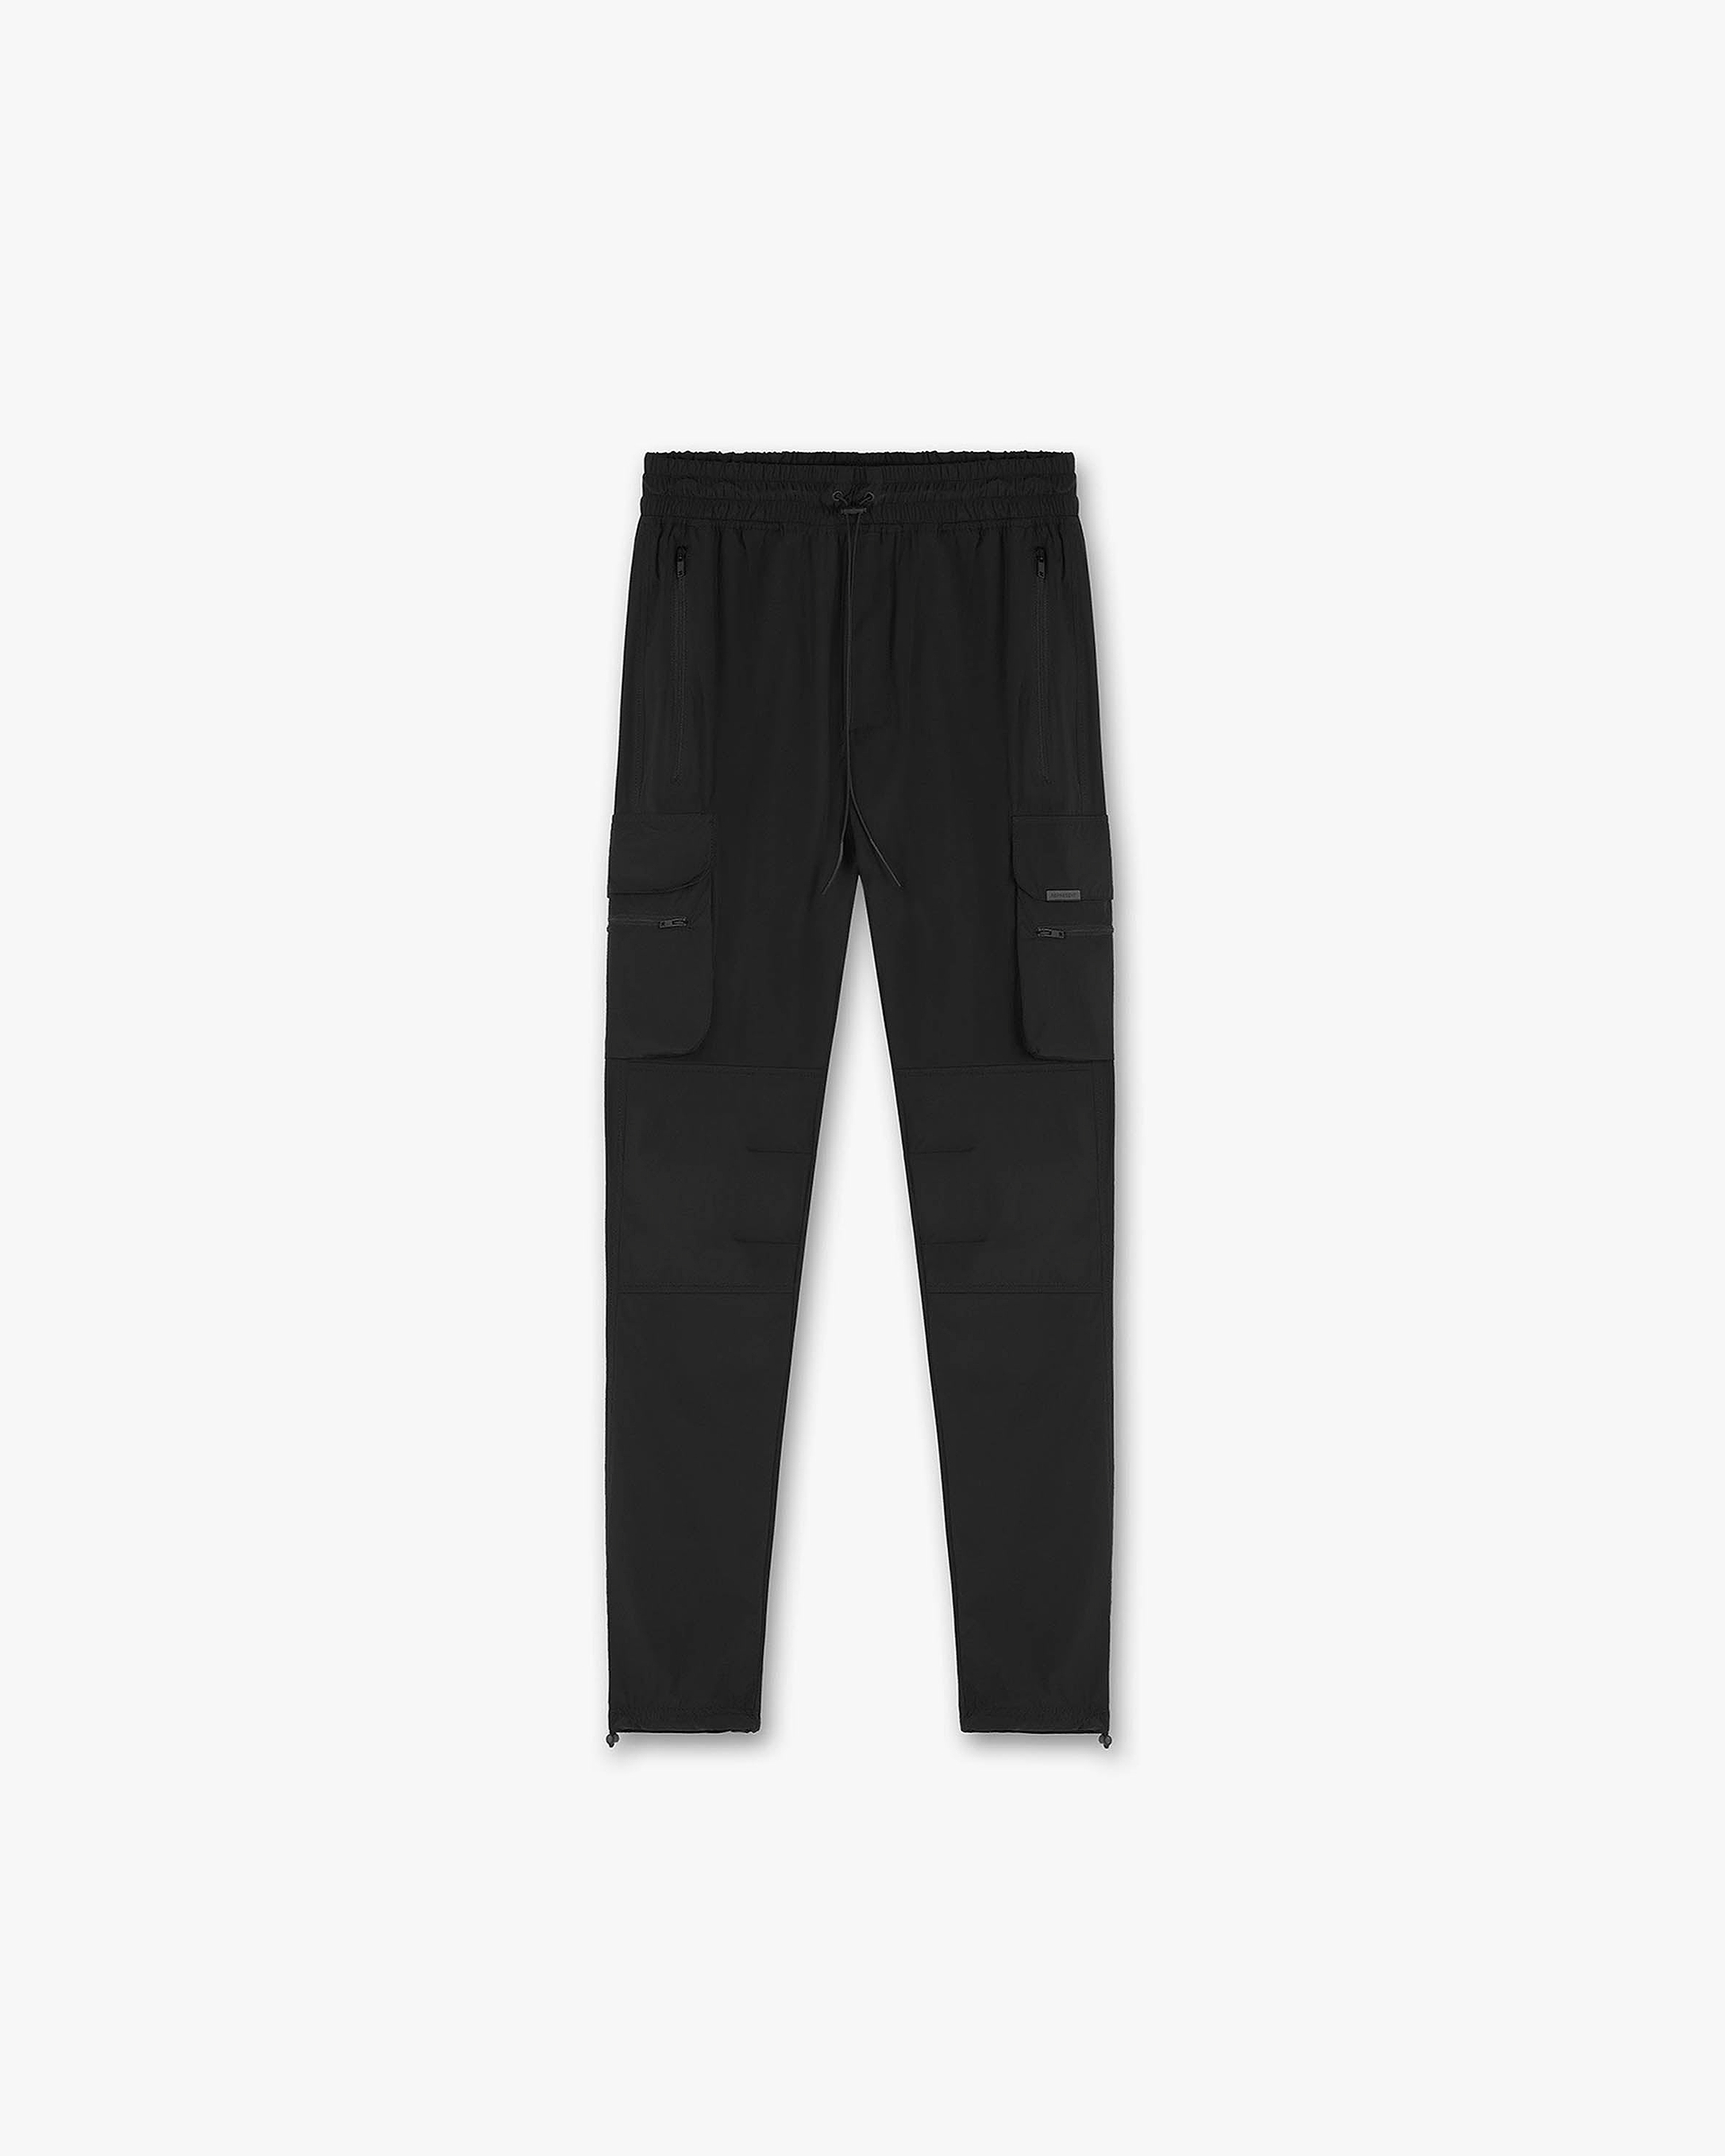 CLO | Nylon | REPRESENT 247 Pants Black Pants Cargo